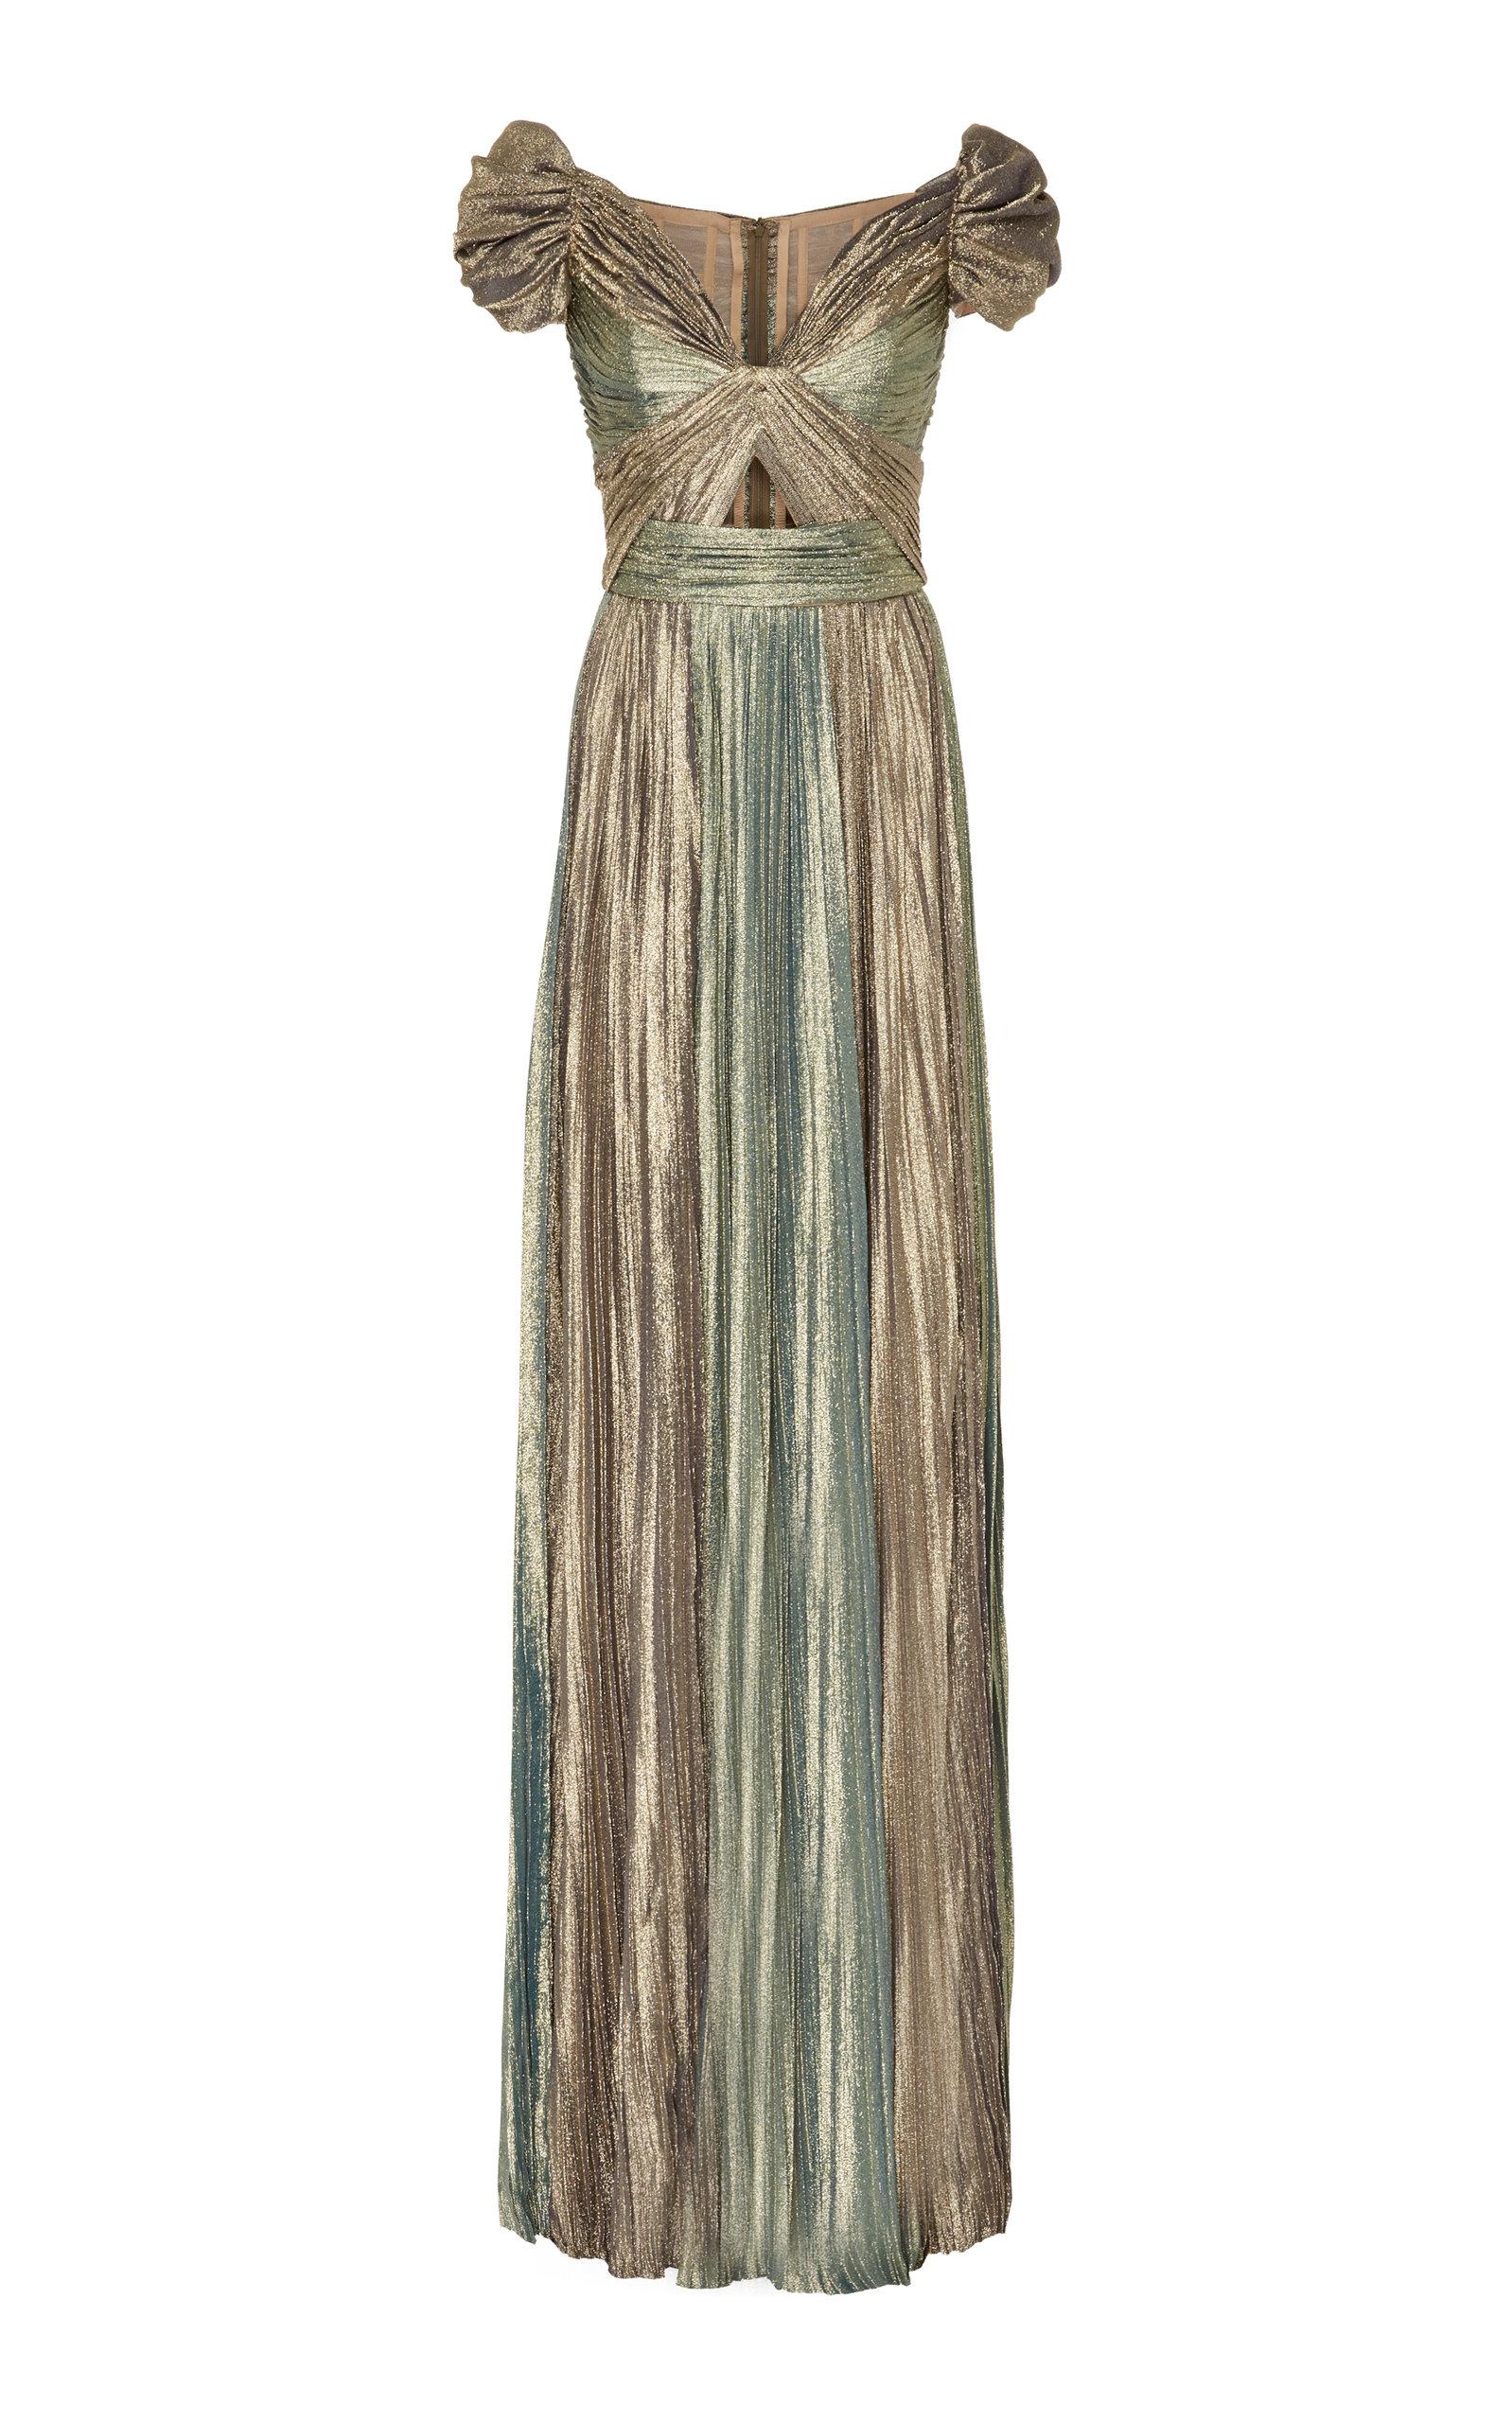 J Mendel Multi Color Gown Size 4 | eBay